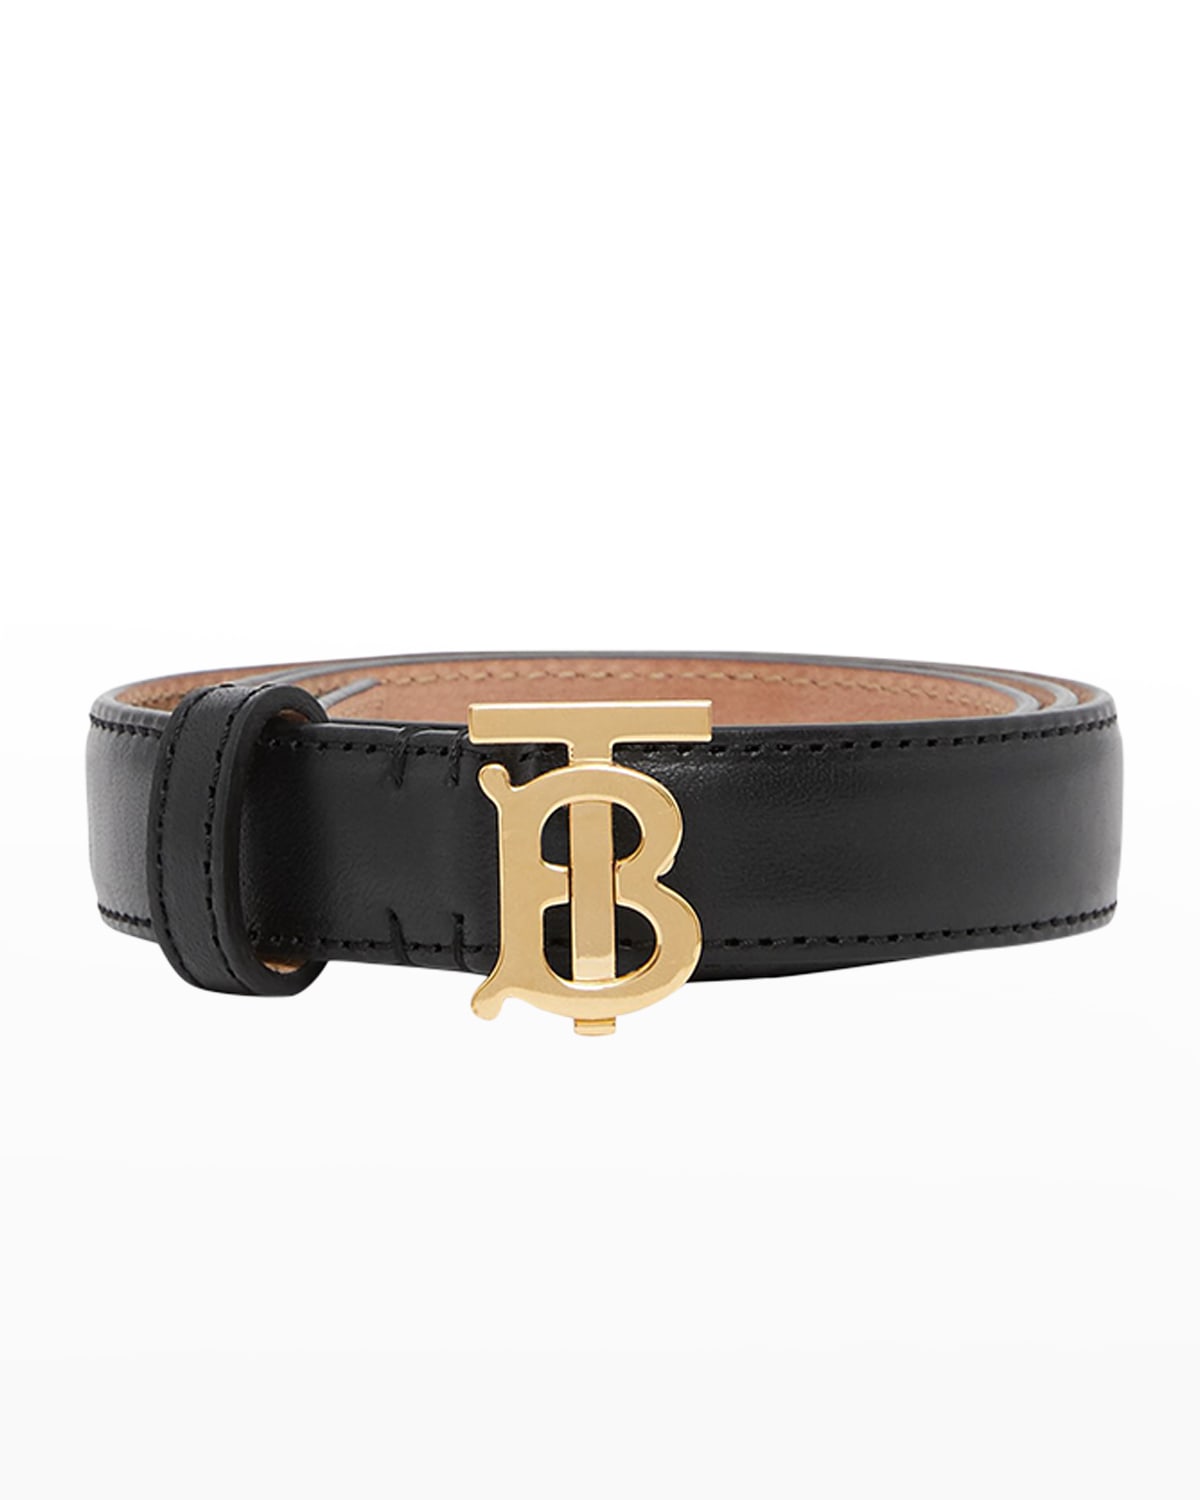 TB Calf Leather Skinny Belt